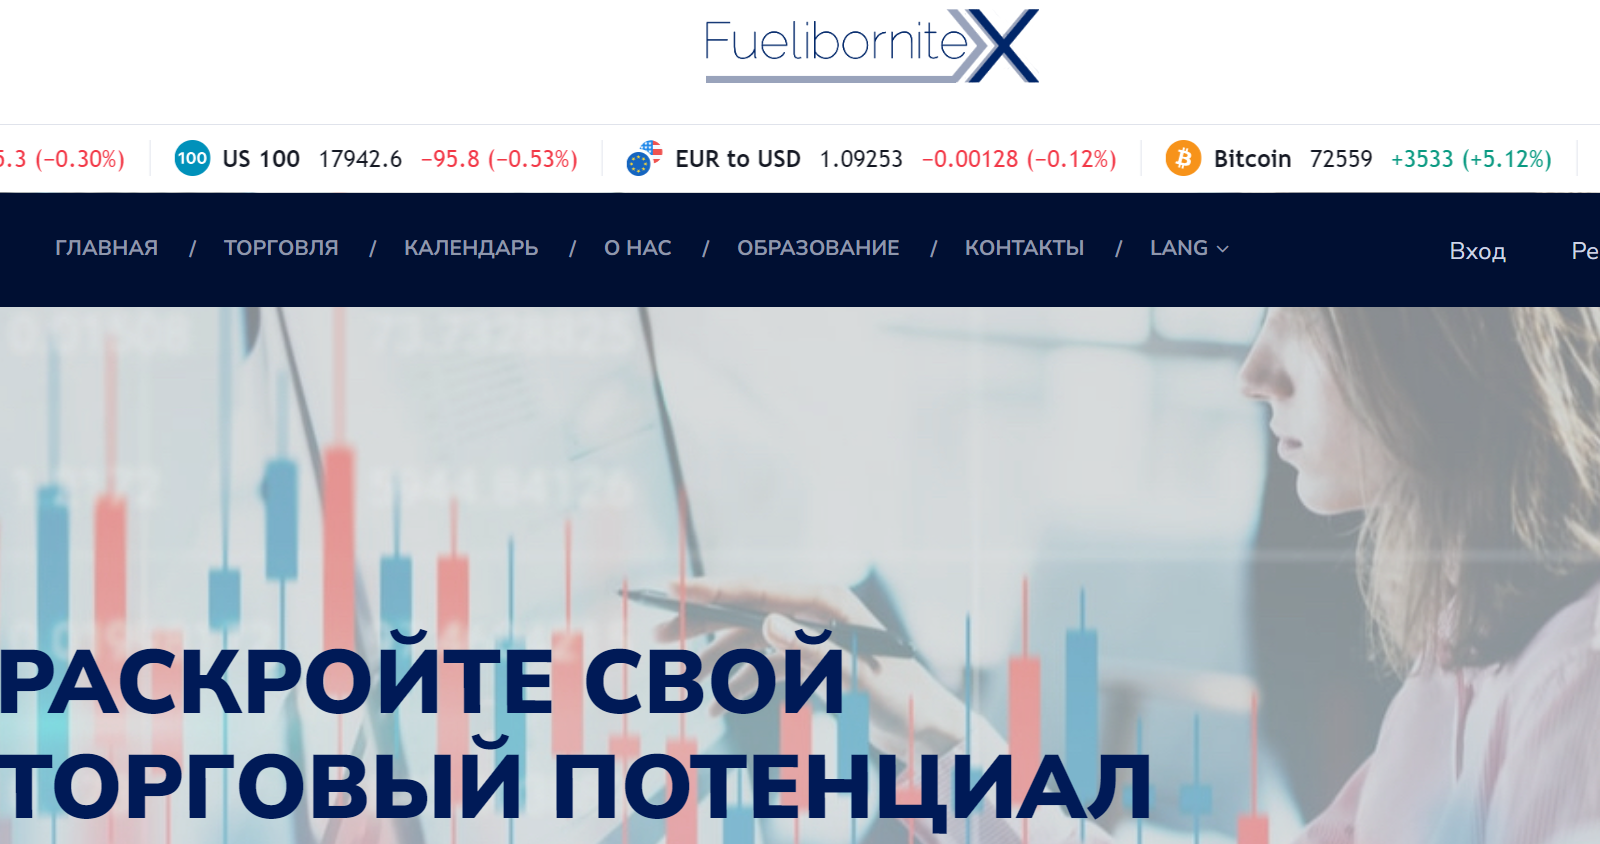 Fuelibornitex - сайт